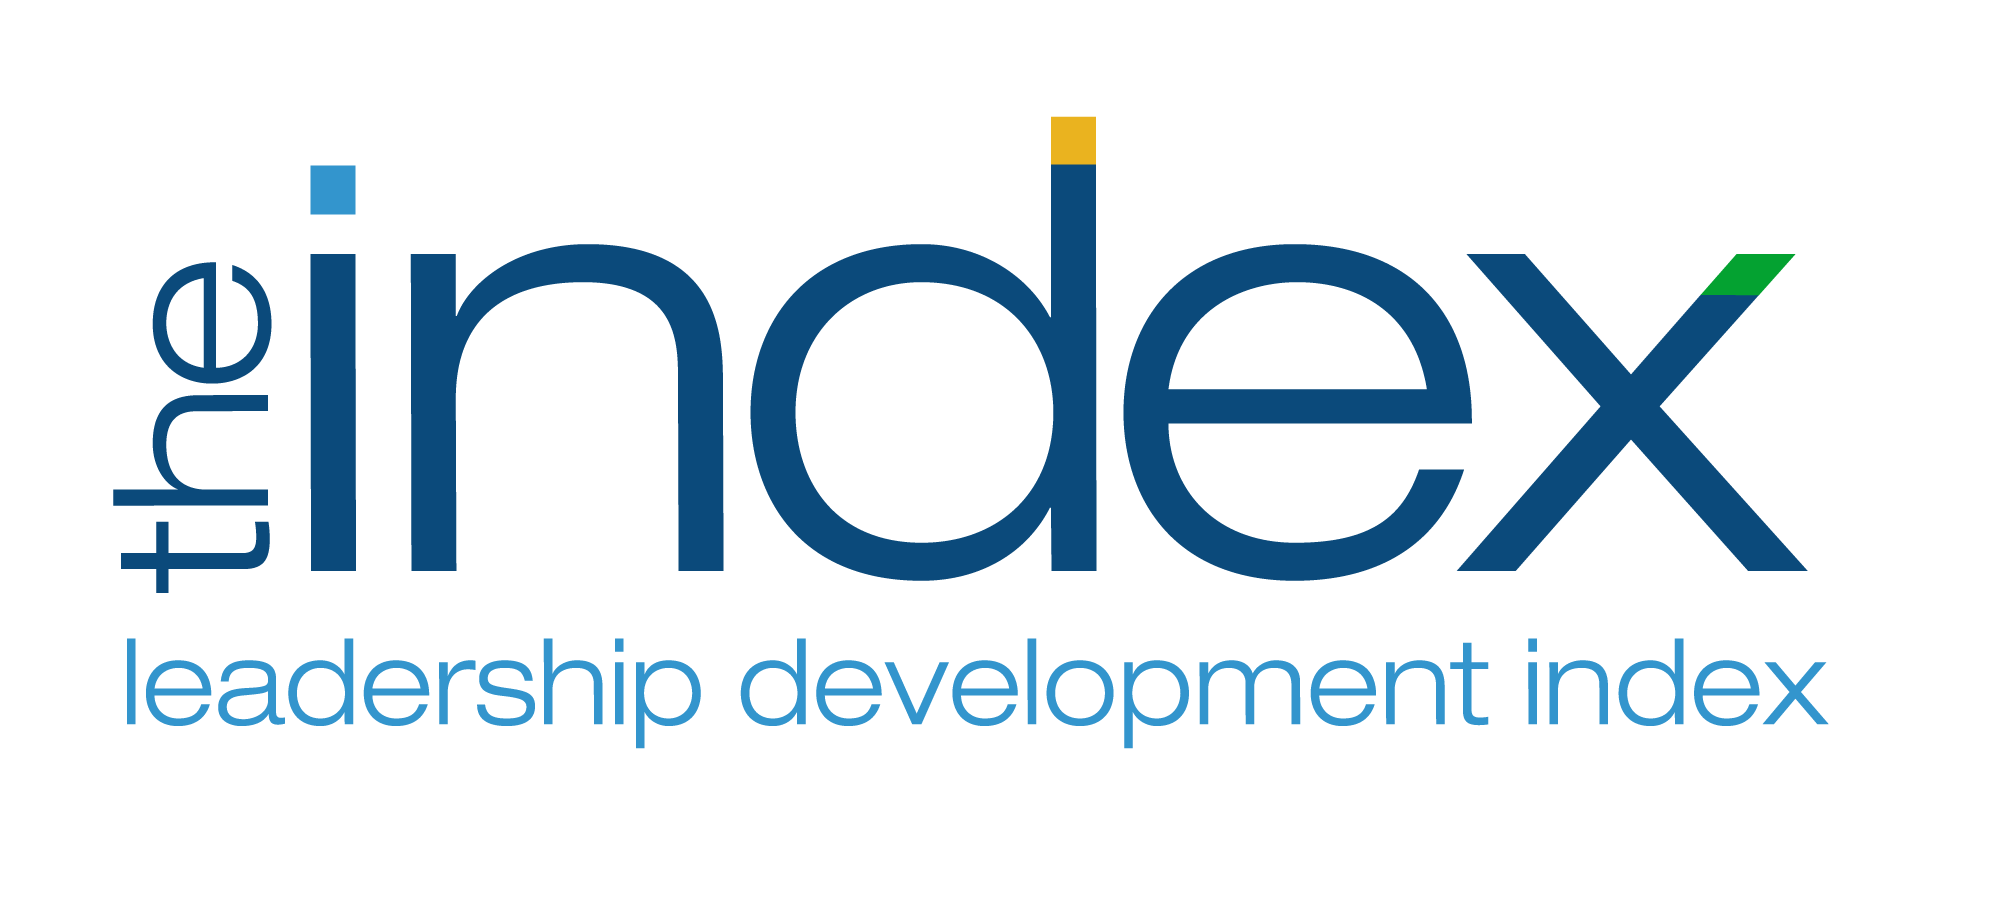 The Index Logo